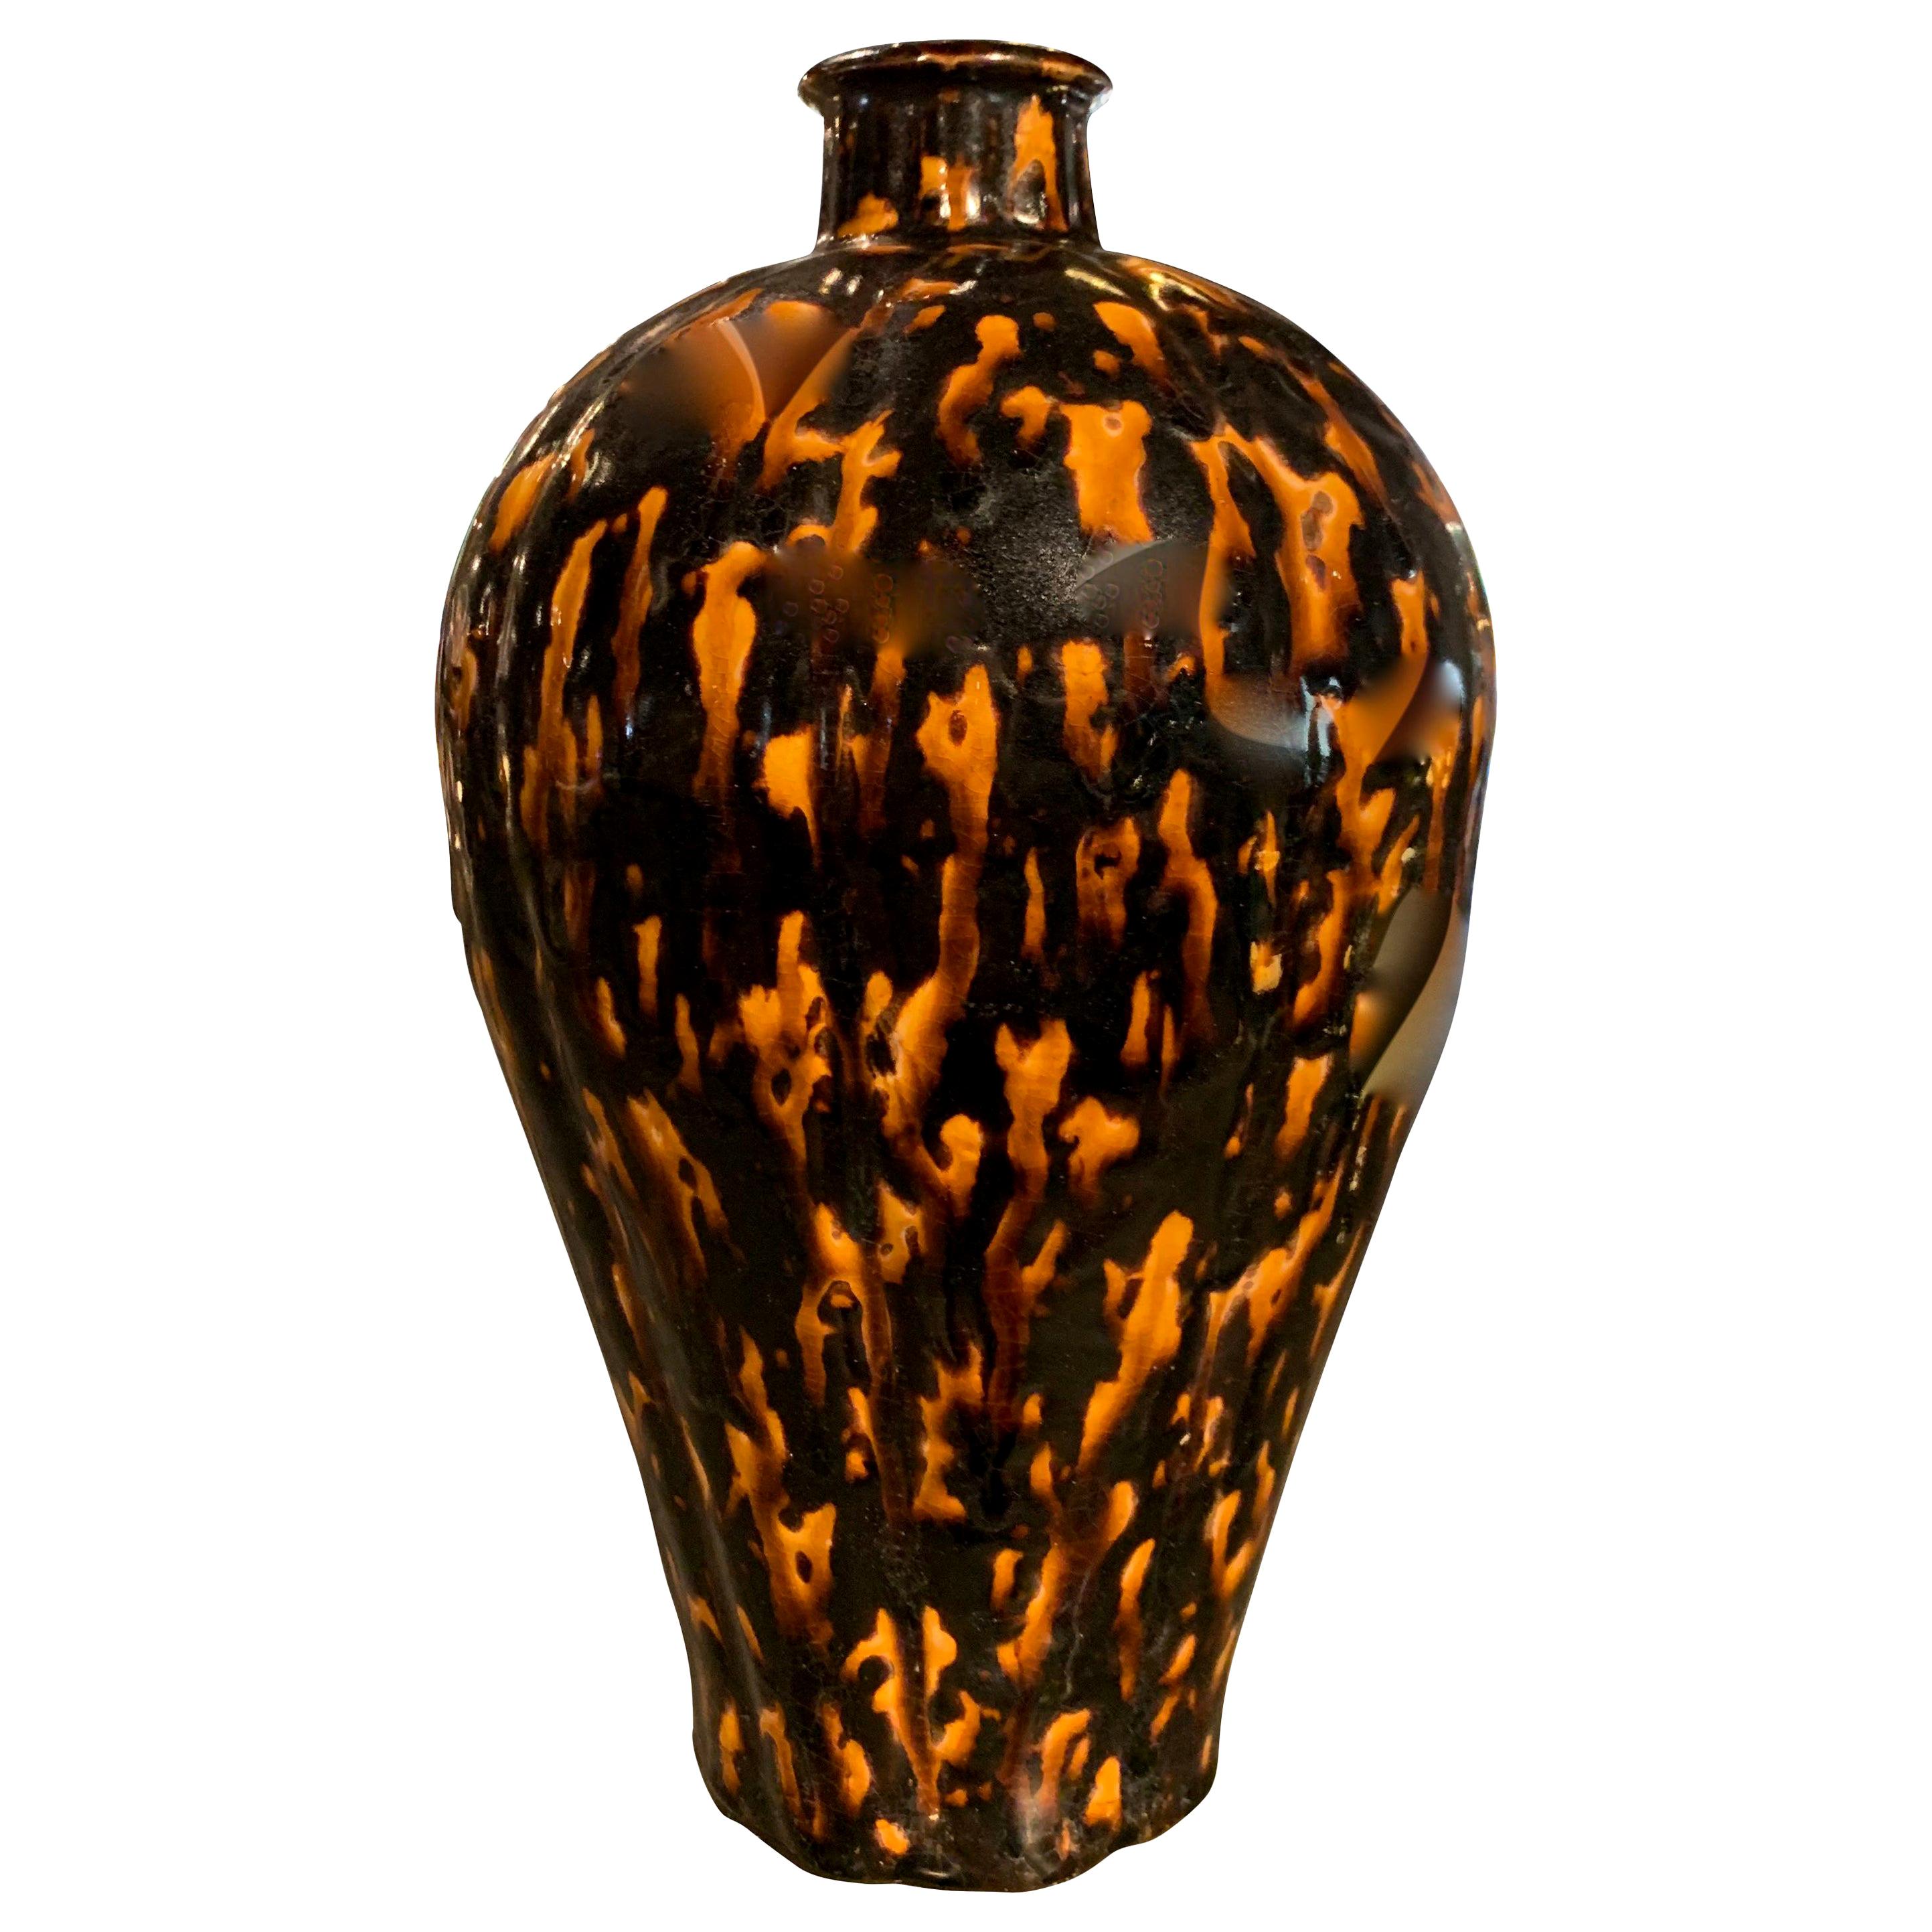 "Tortoise" Pattern Vase, China, Contemporary